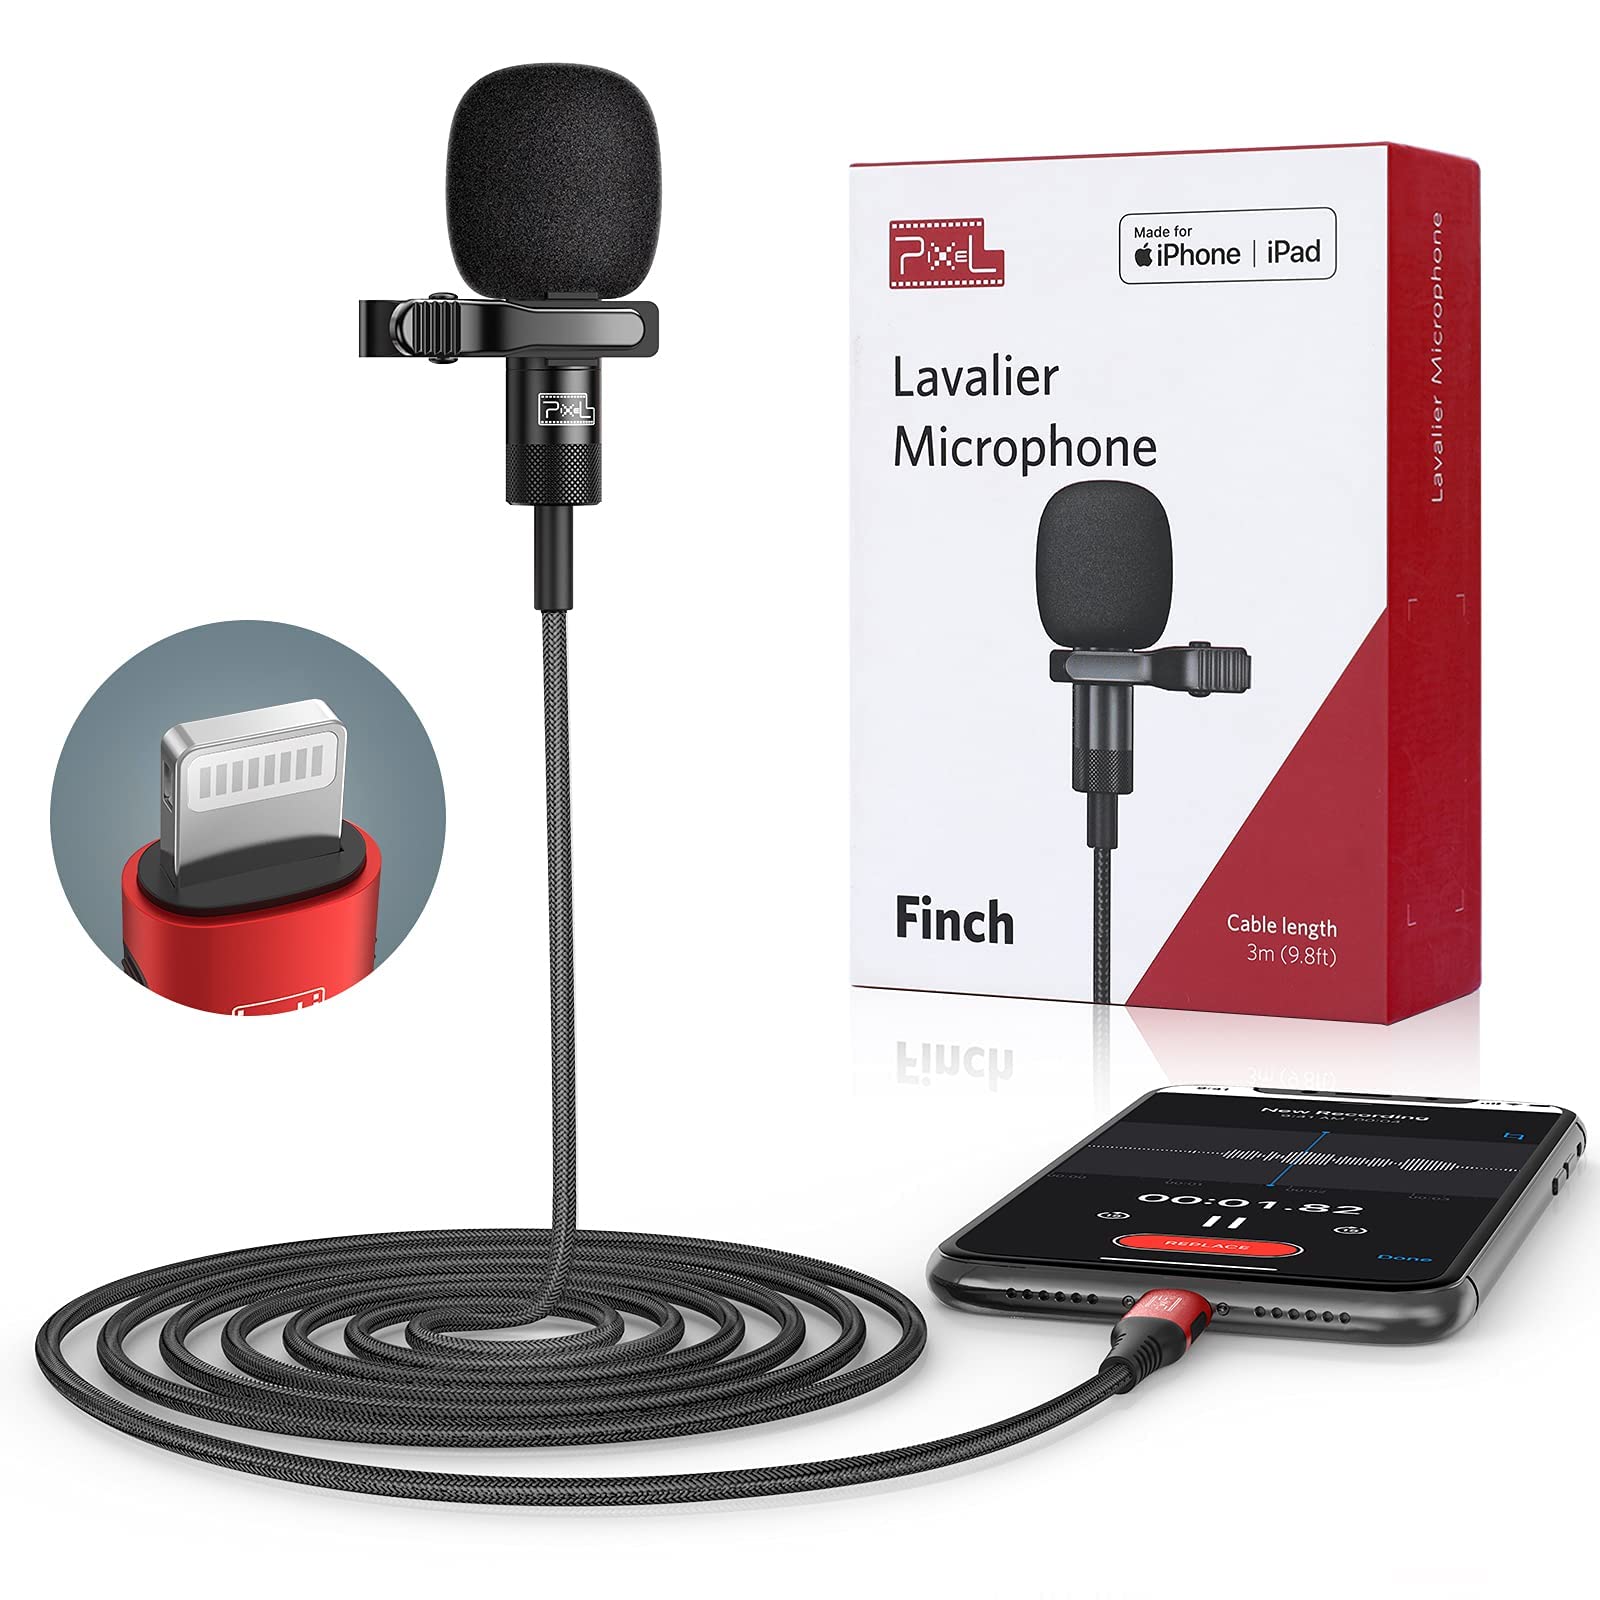 PIXEL Mikrofon für iPhone iPad (Apple MFi-zertifiziert) von Mikrofon für iPhone Live Streaming Vlogging | Externes Mikrofon für iPhone Videoaufnahme, kompatibel mit Apple Lightning Geräten (1,5m)